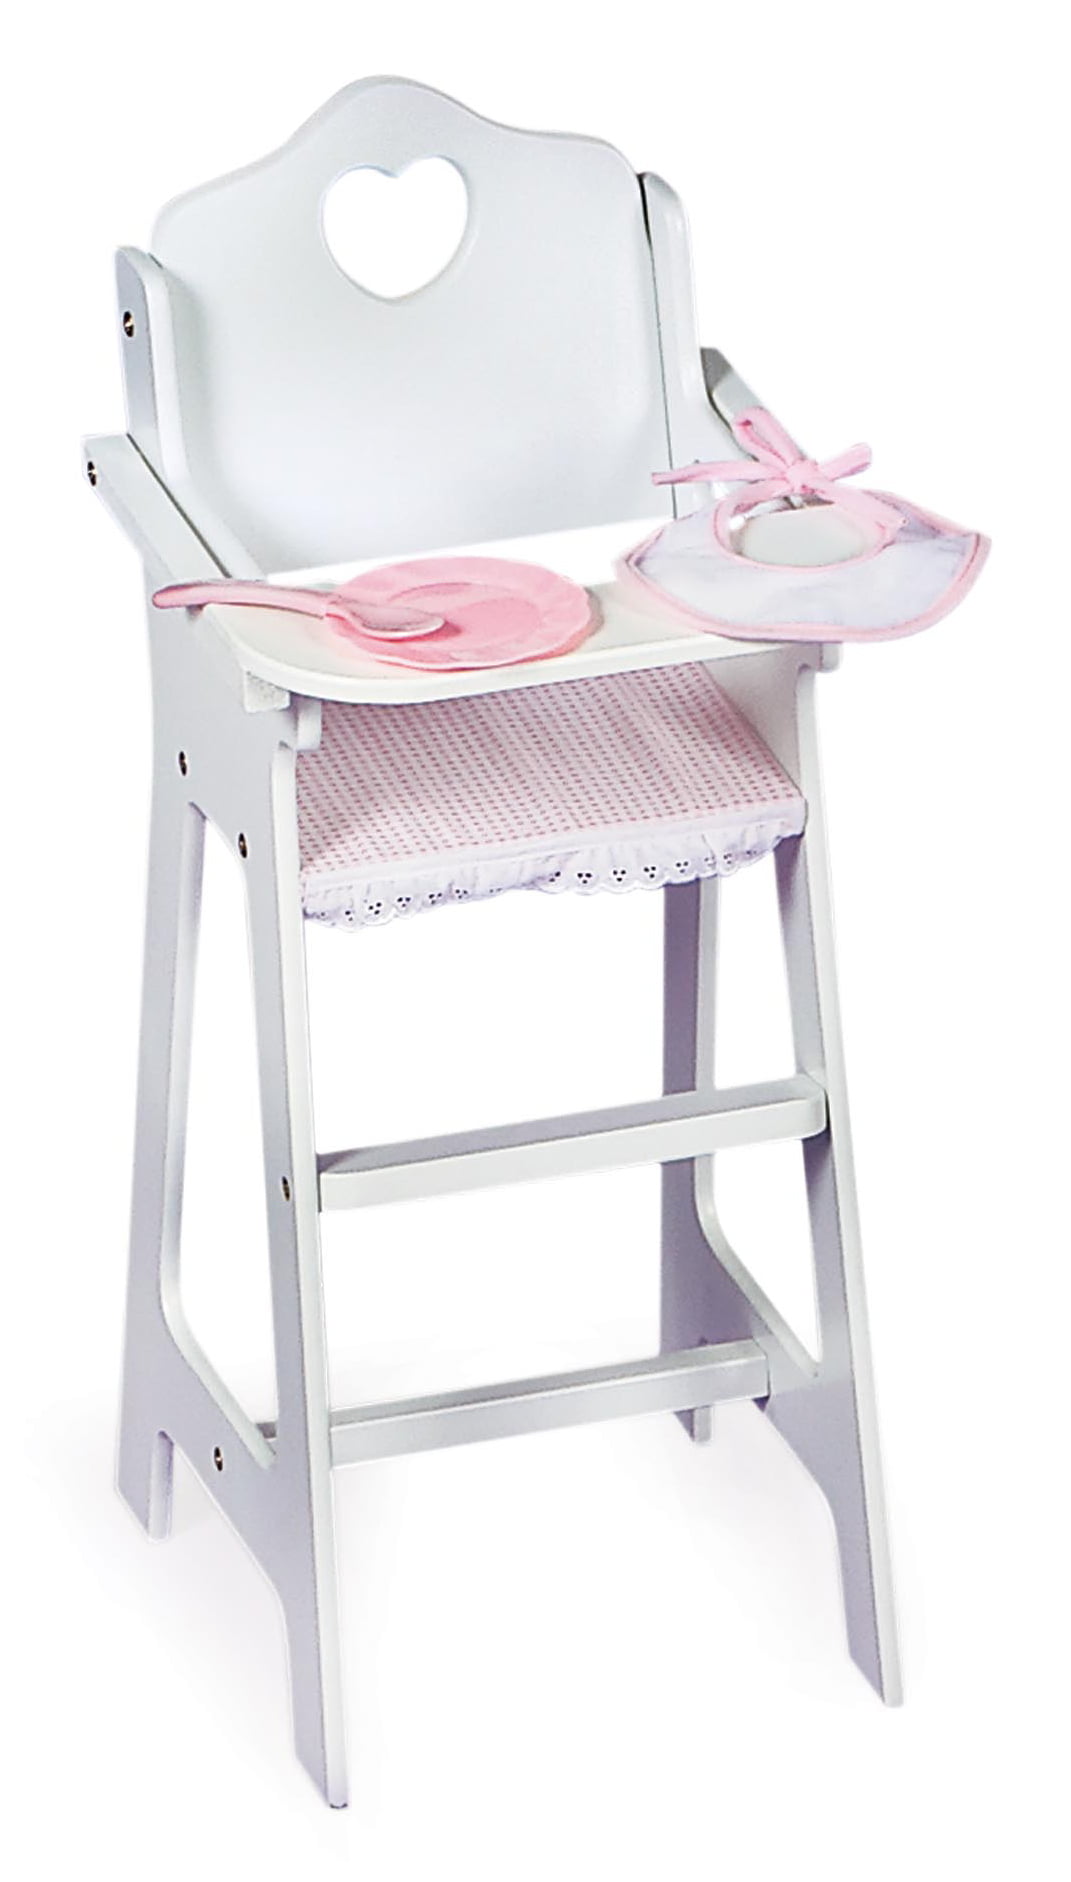 Badger Basket White Rose Doll High Chair fits American Girl Dolls White